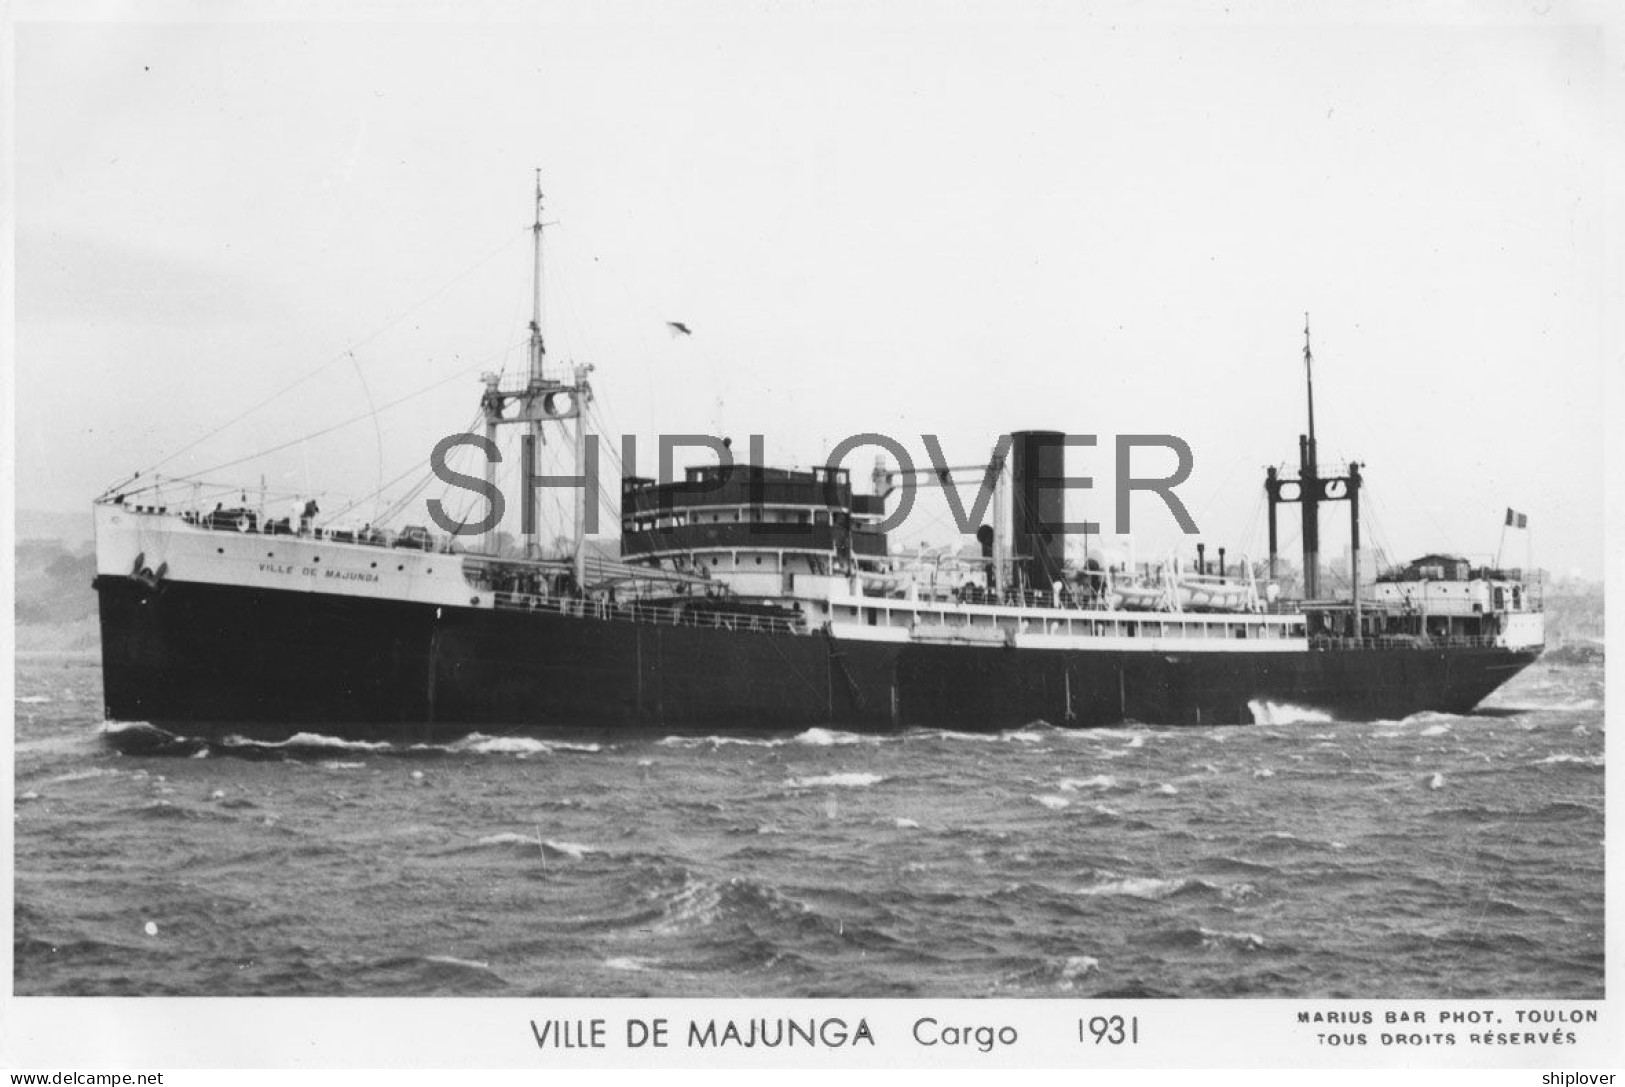 Cargo Français VILLE DE MAJUNGA - Carte Photo éditions Marius Bar - Bateau/ship/schiff - Commerce